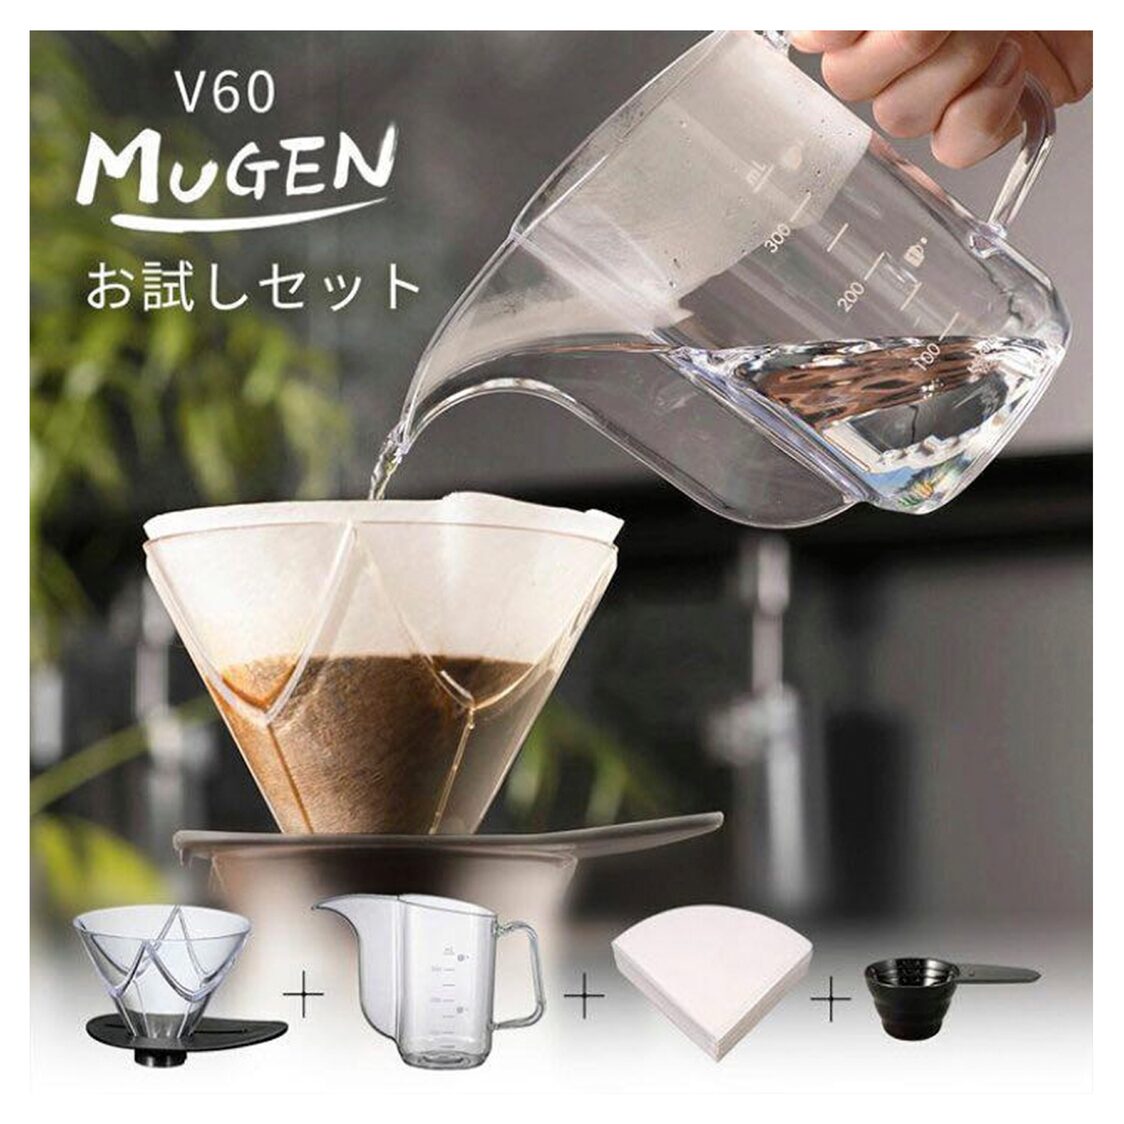 Hario Mugen Coffee Maker